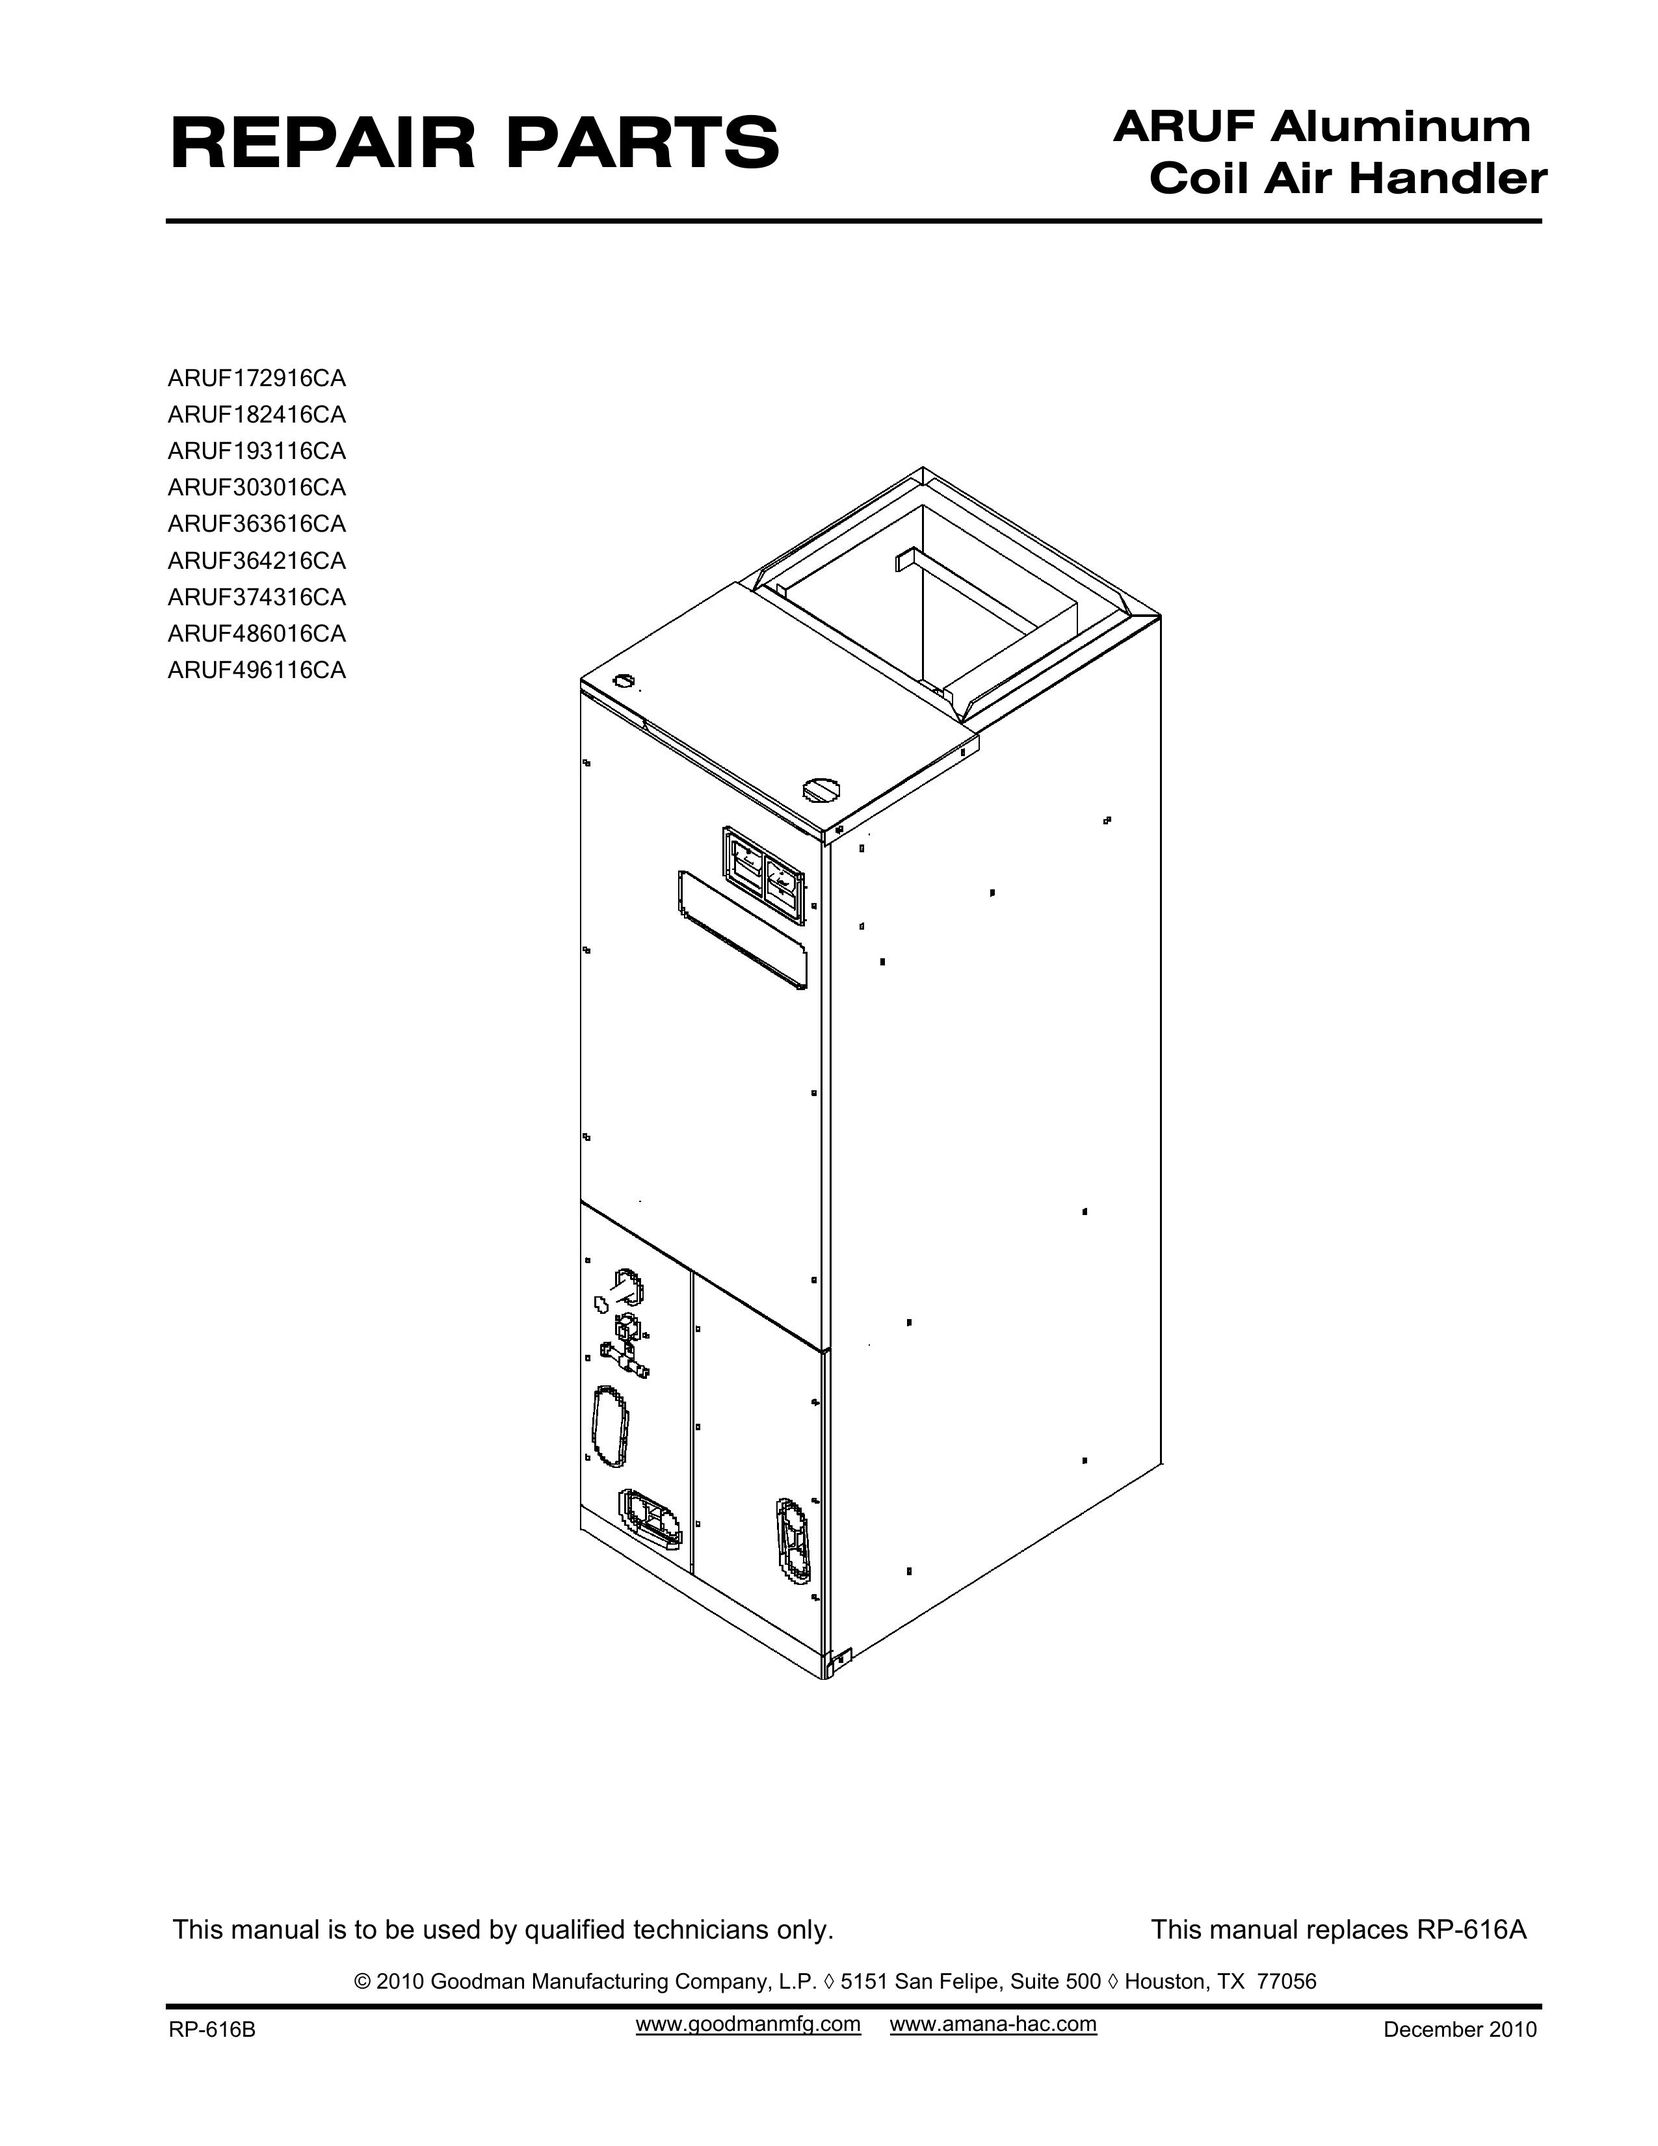 Goodman Mfg ARUF363616CA Air Conditioner User Manual